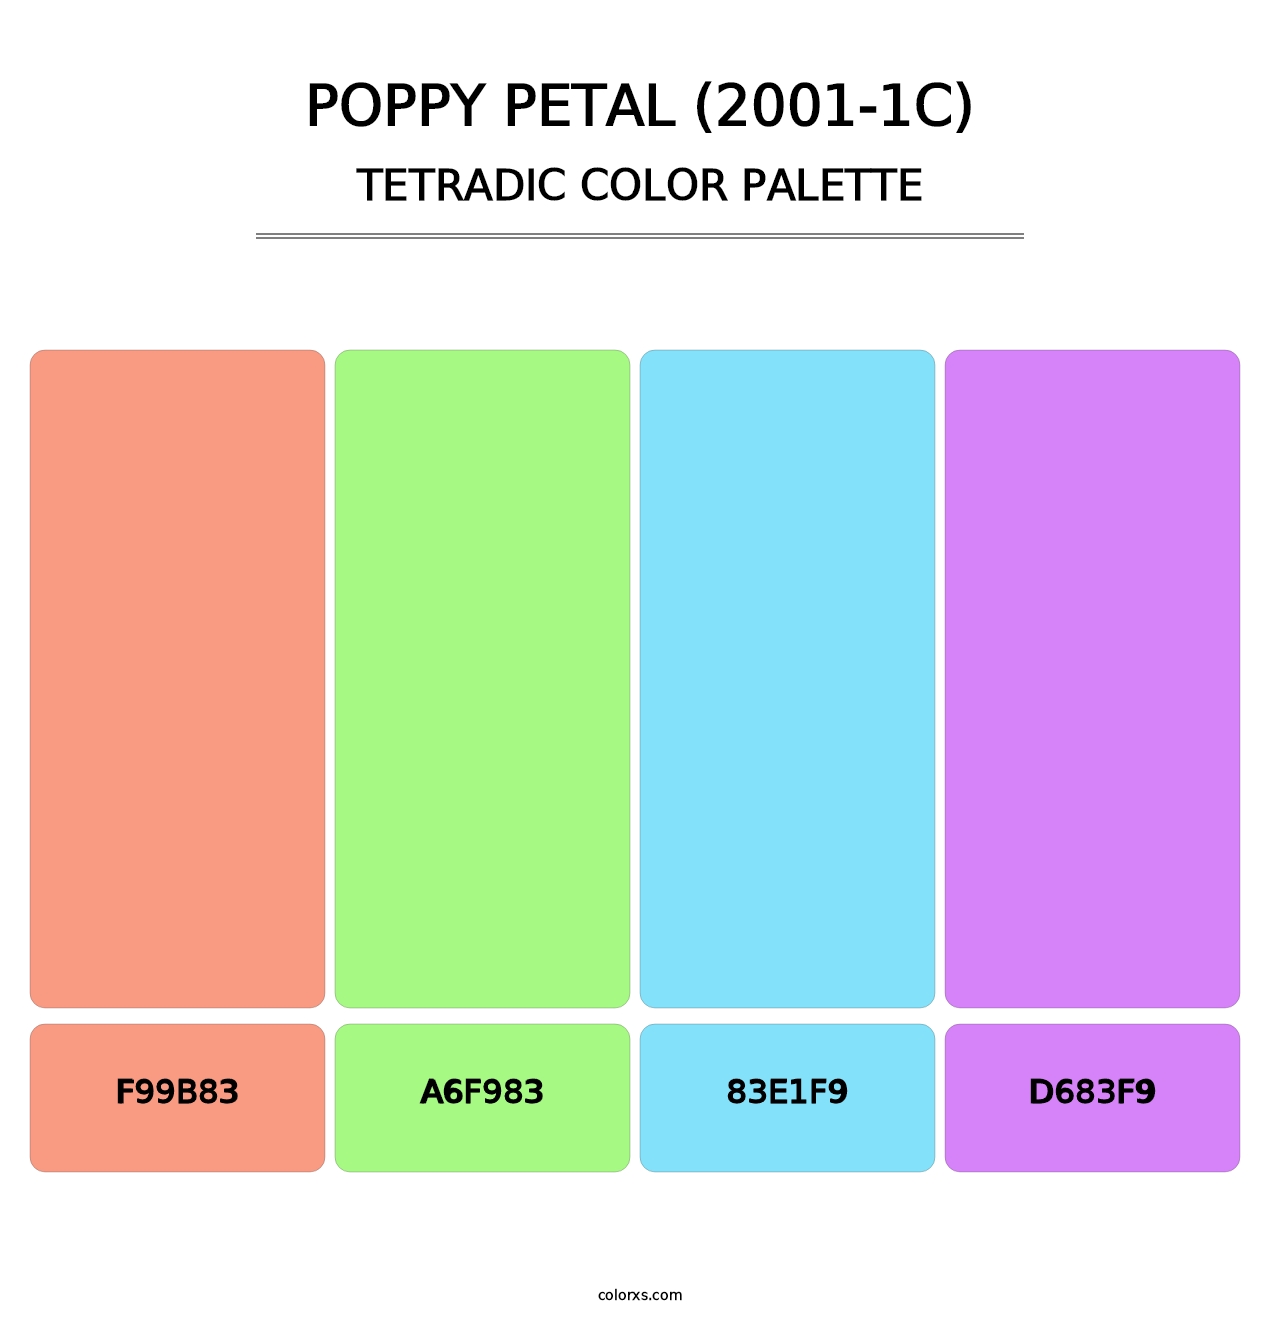 Poppy Petal (2001-1C) - Tetradic Color Palette